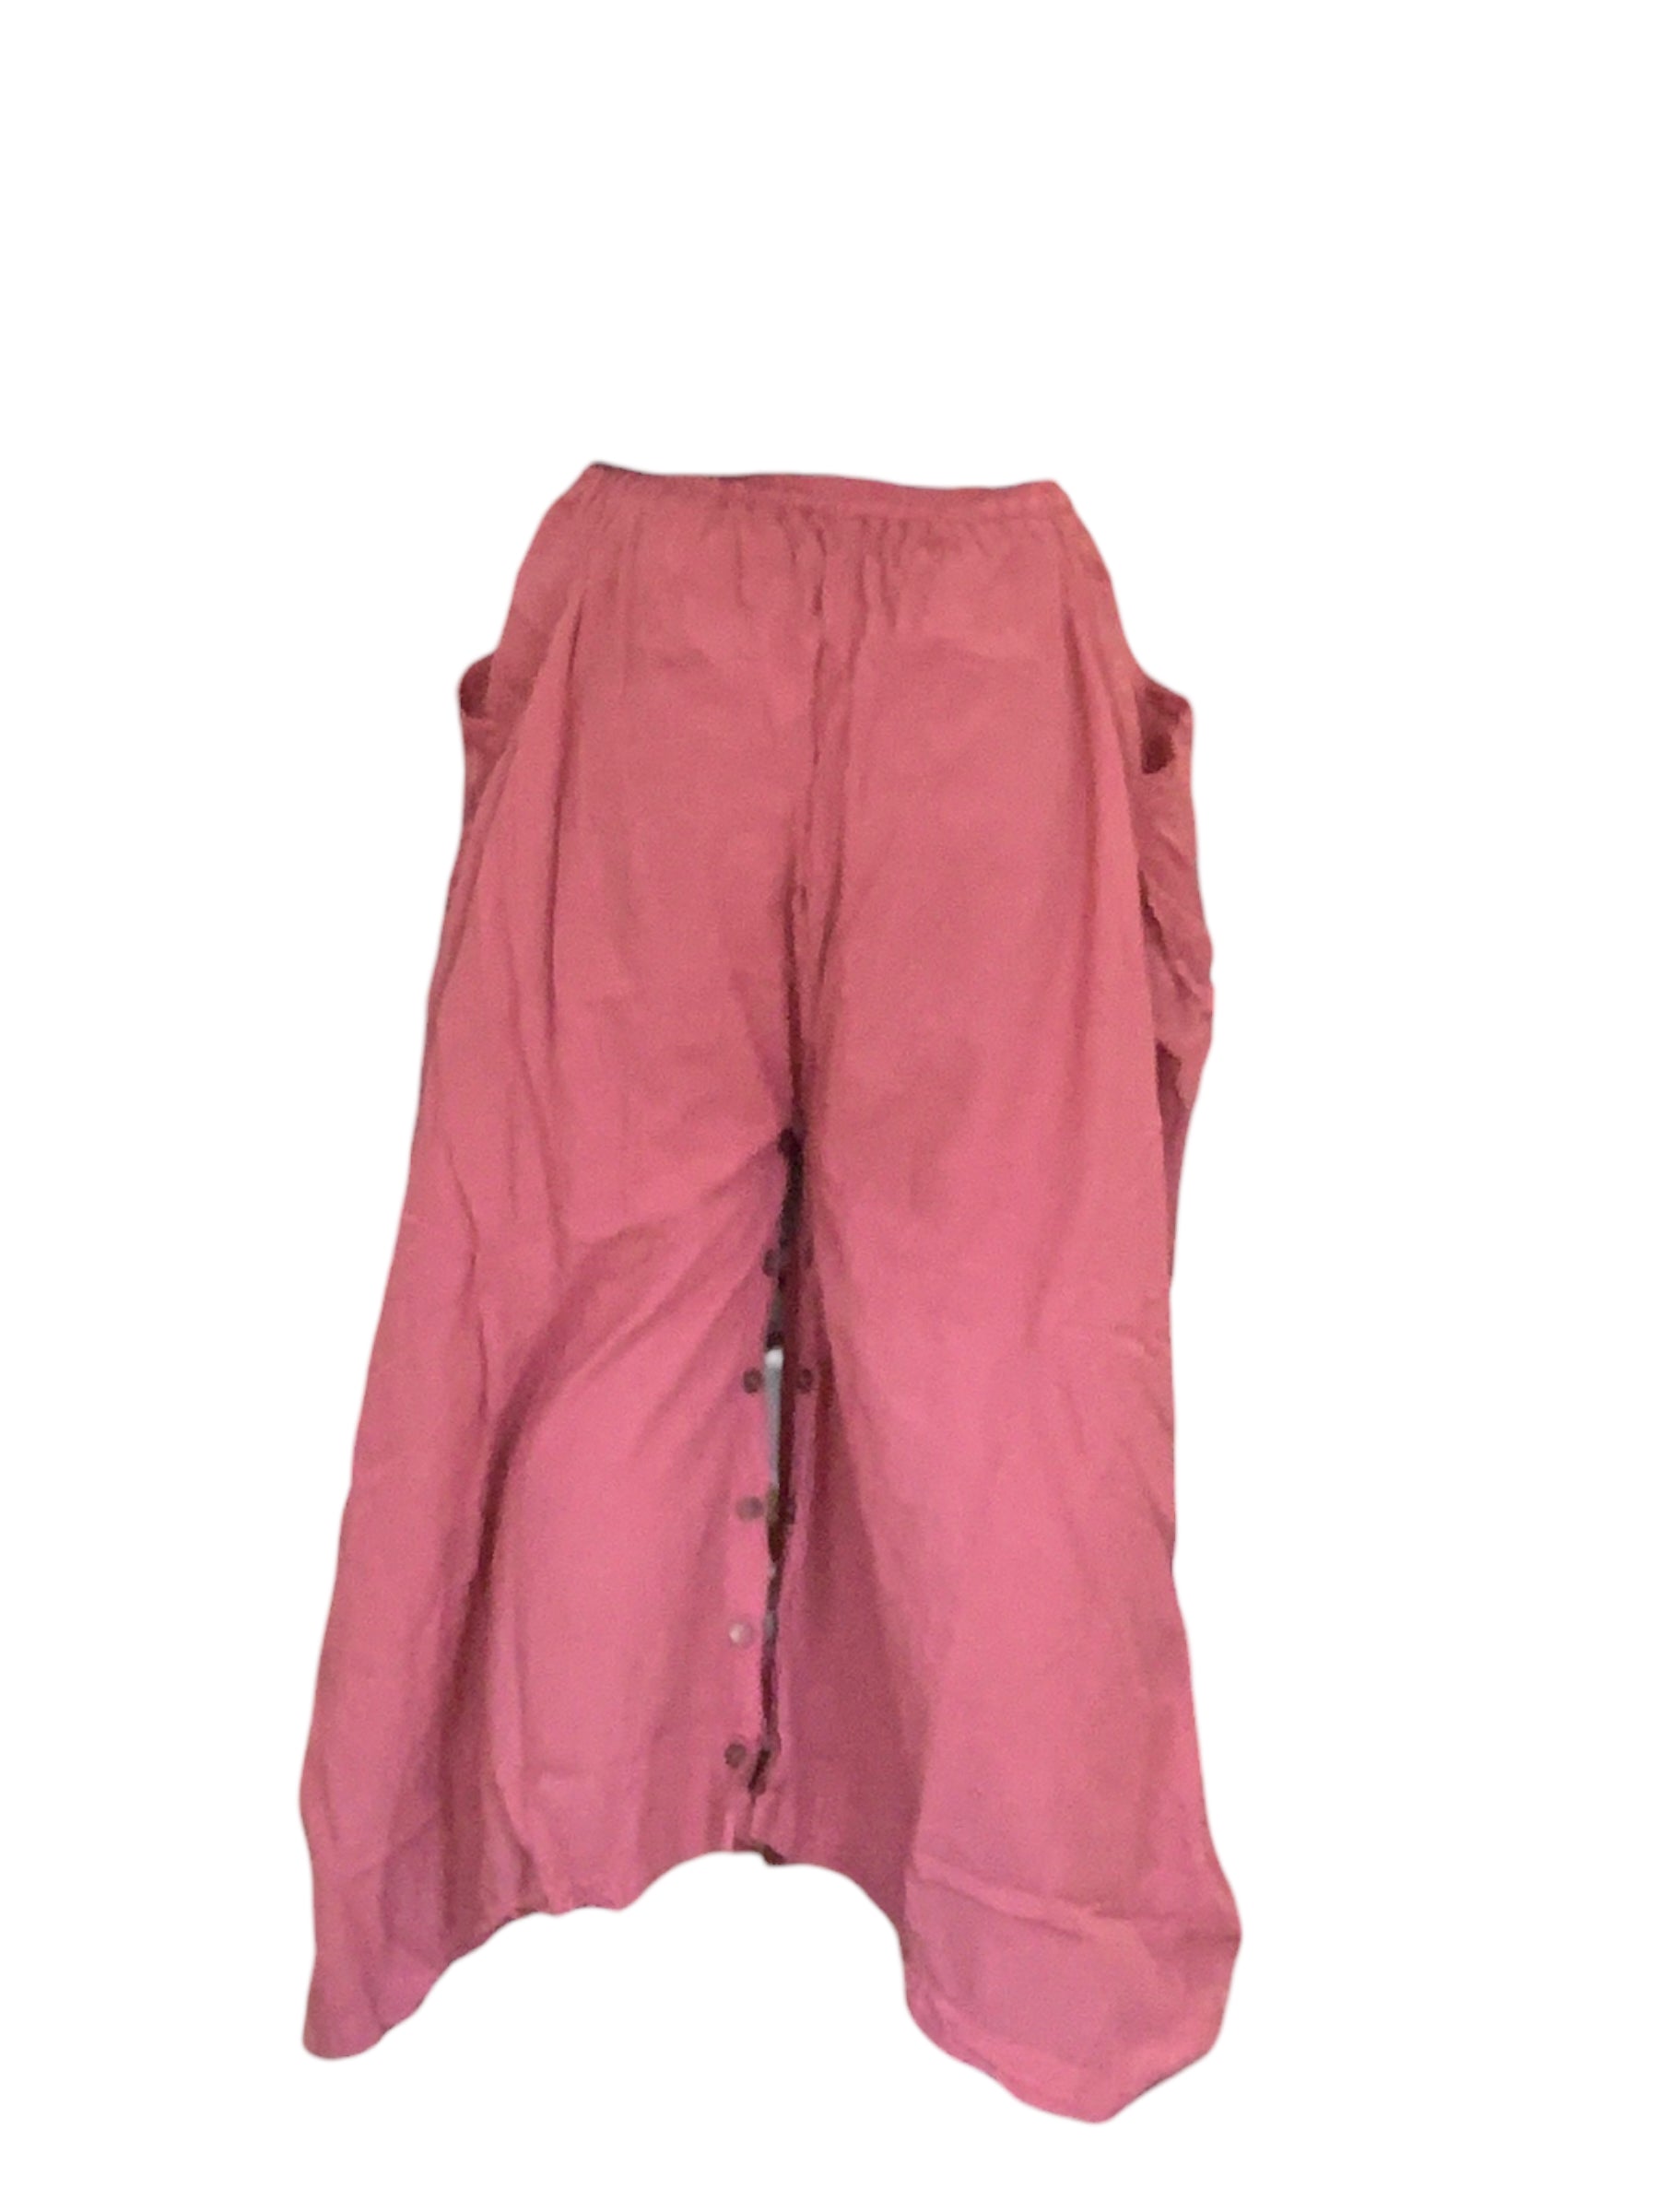 Watermelon Cotton Voile Tashi Versatile Pants/Skirt